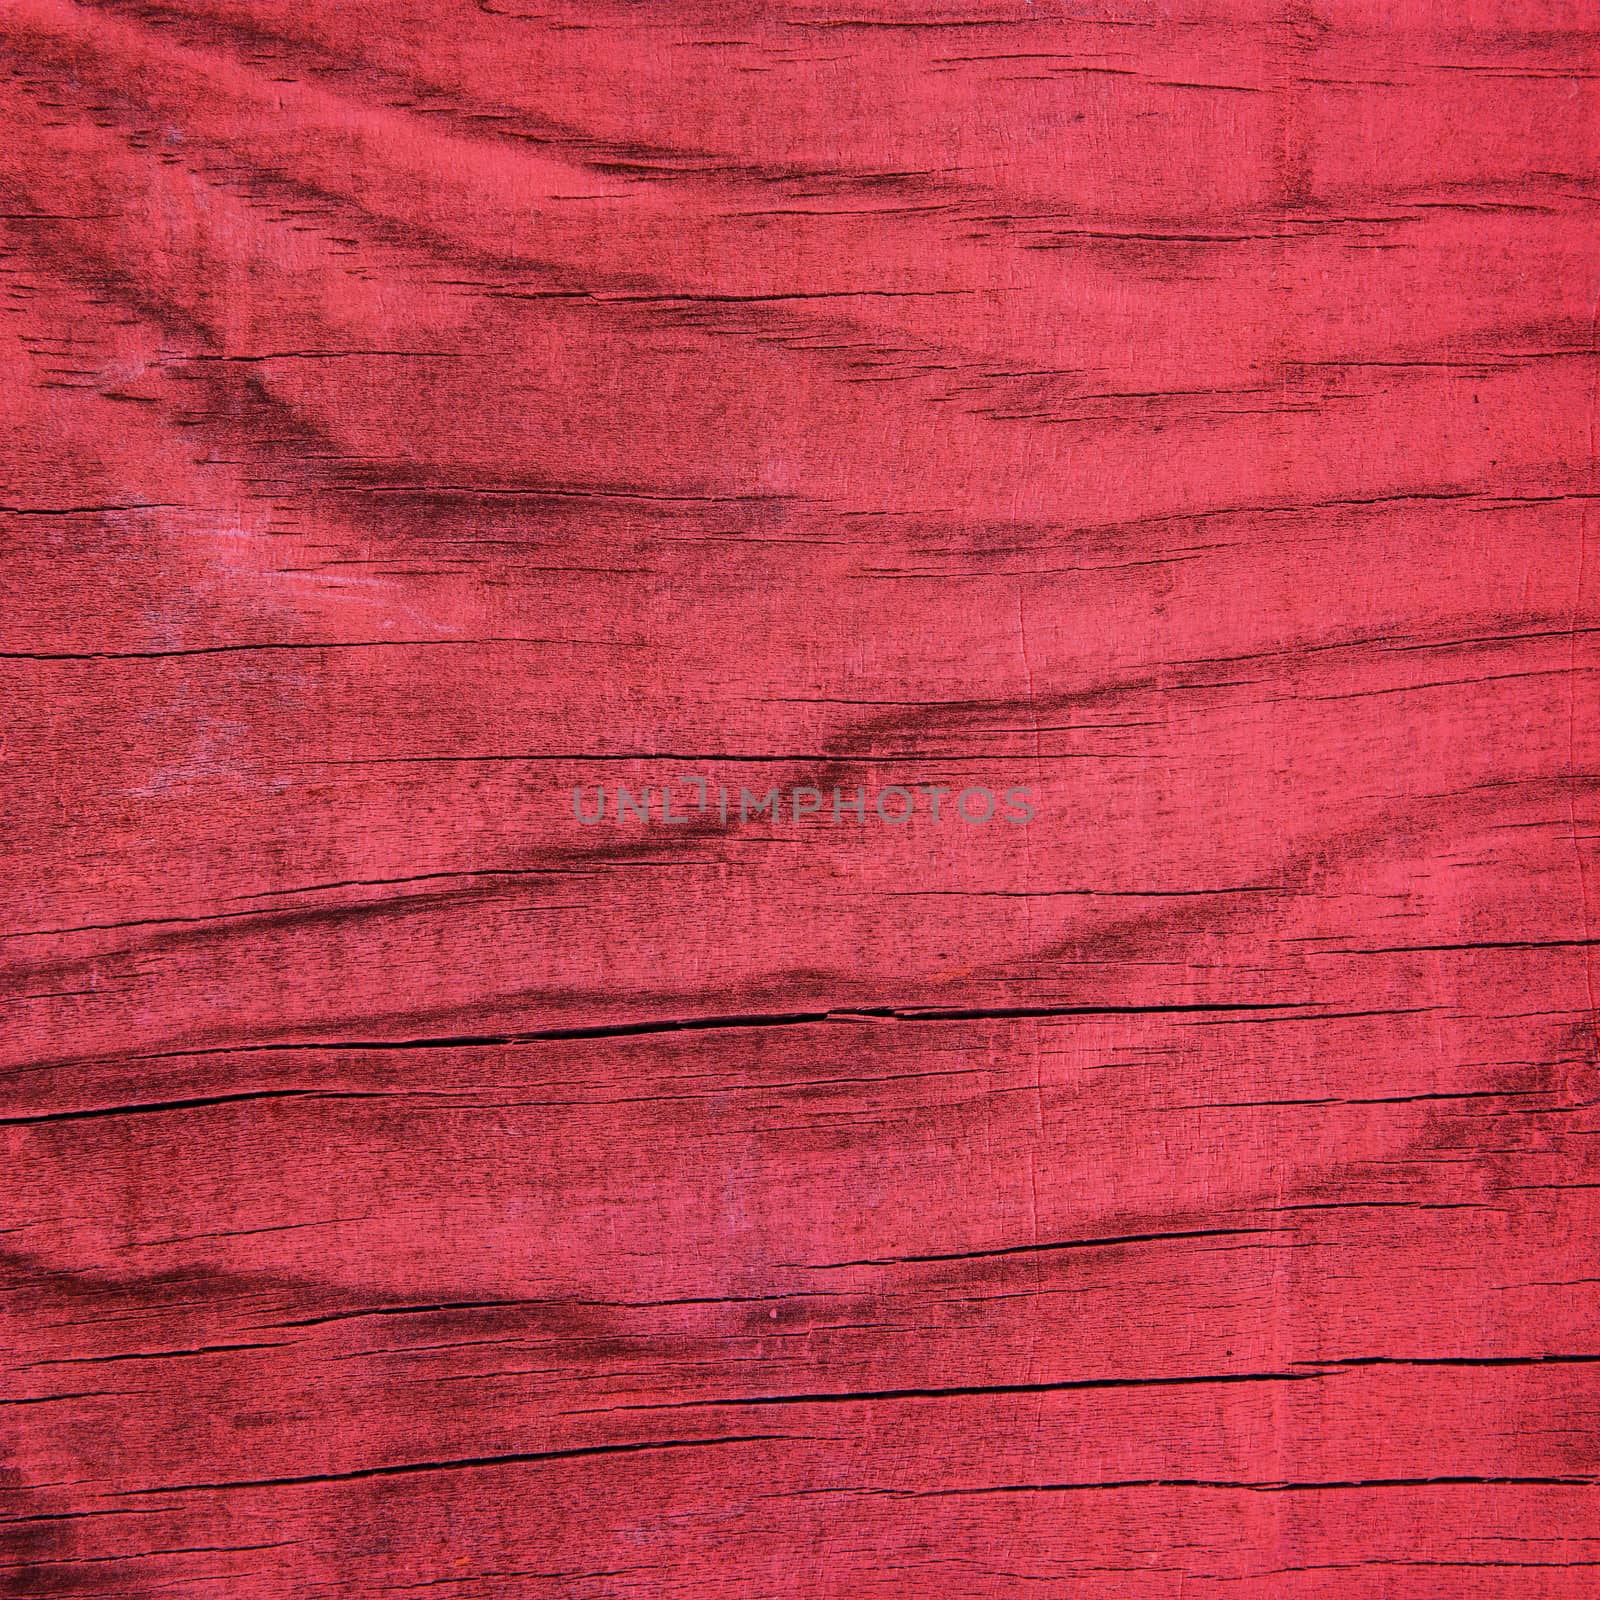 Grunge red wood texture by wyoosumran